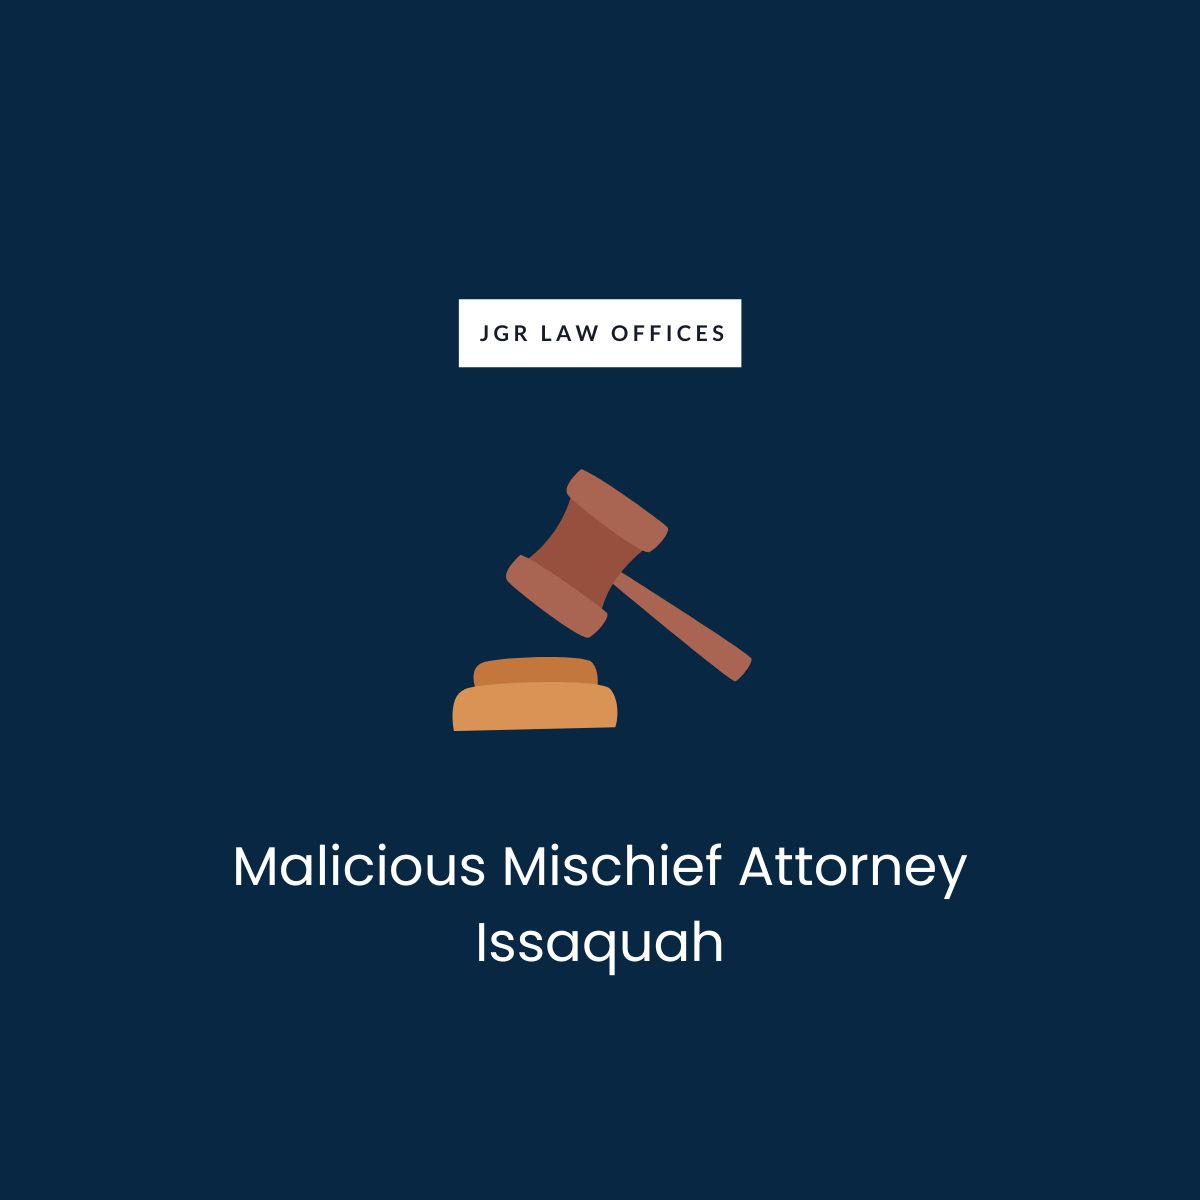 Malicious Mischief Attorney Issaquah